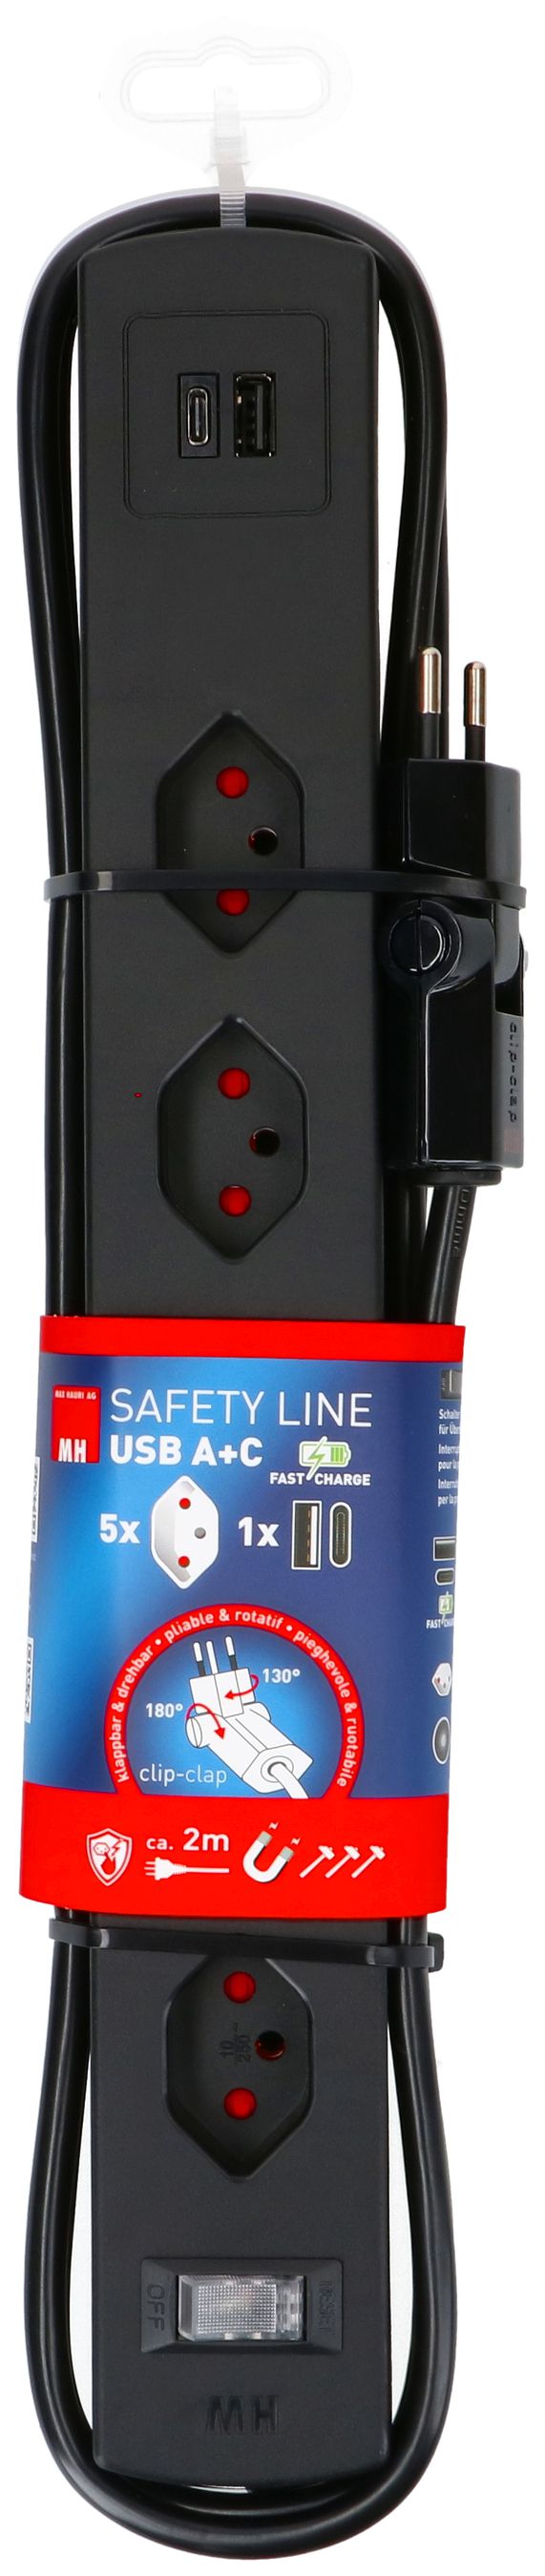 multip. Safety Line 5x tipo 13 90° BS ne interr. USB mag. 2m cli.